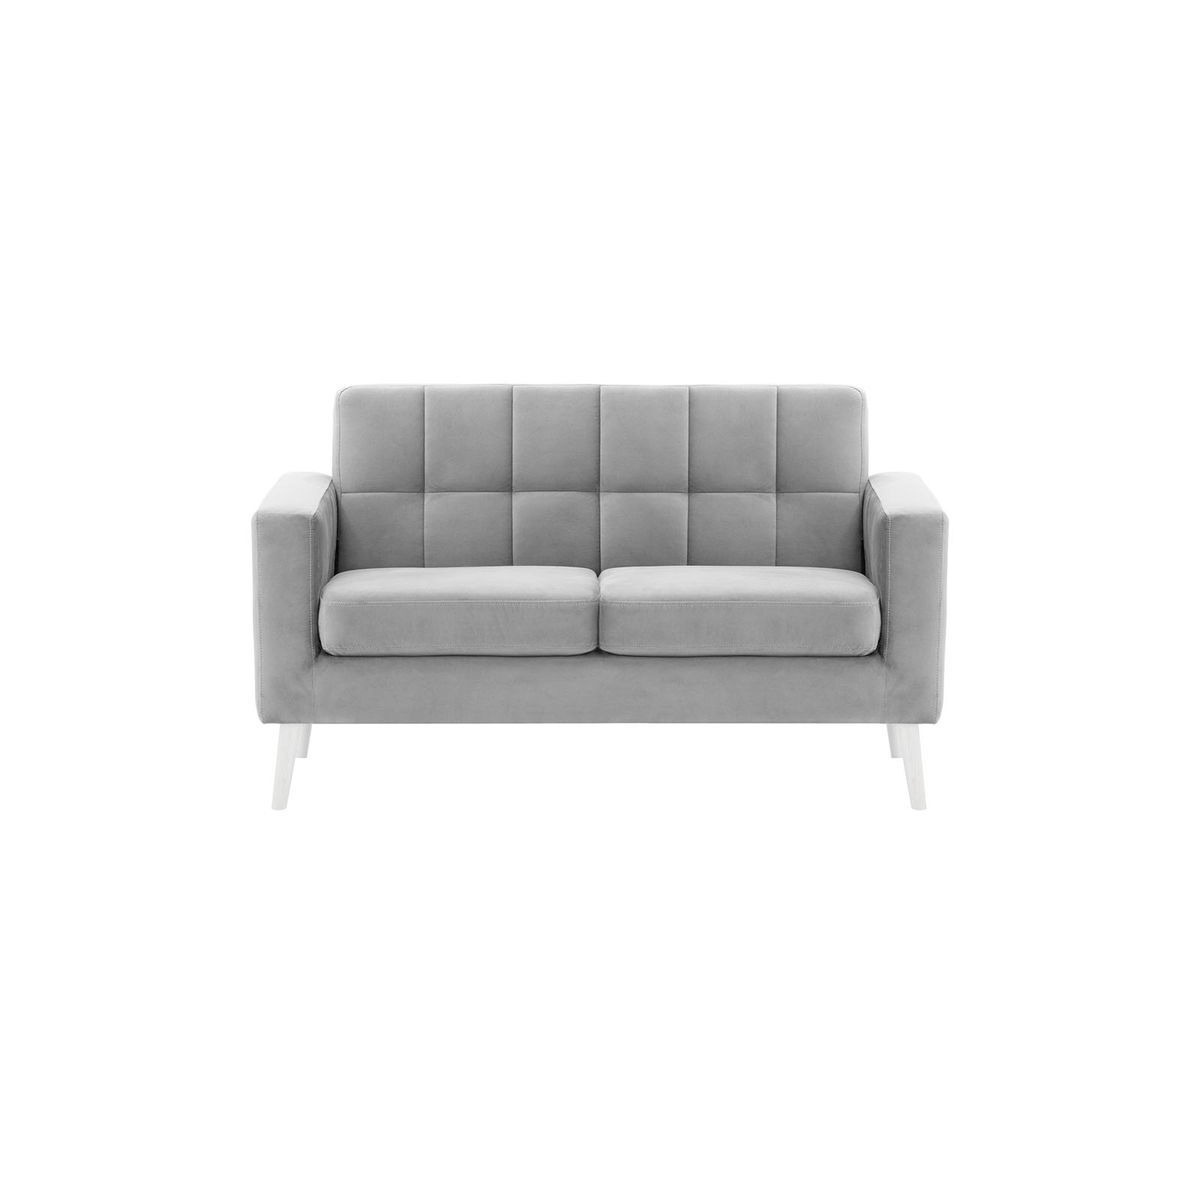 Neat 2 Seater Sofa in a Box, silver, Leg colour: white - image 1